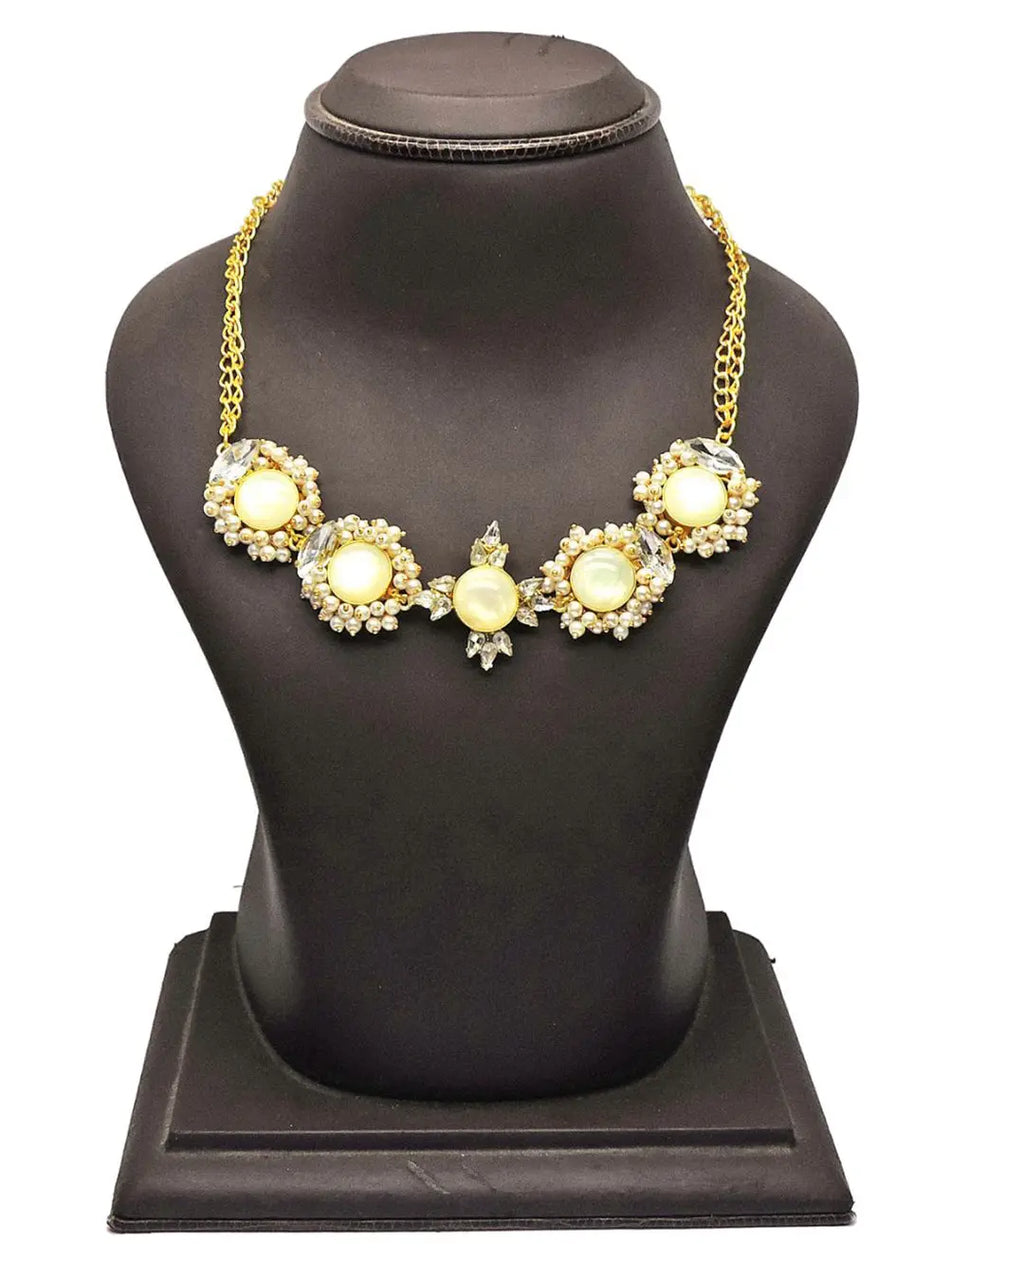 Hazel Necklace- Handcrafted Jewellery from Dori